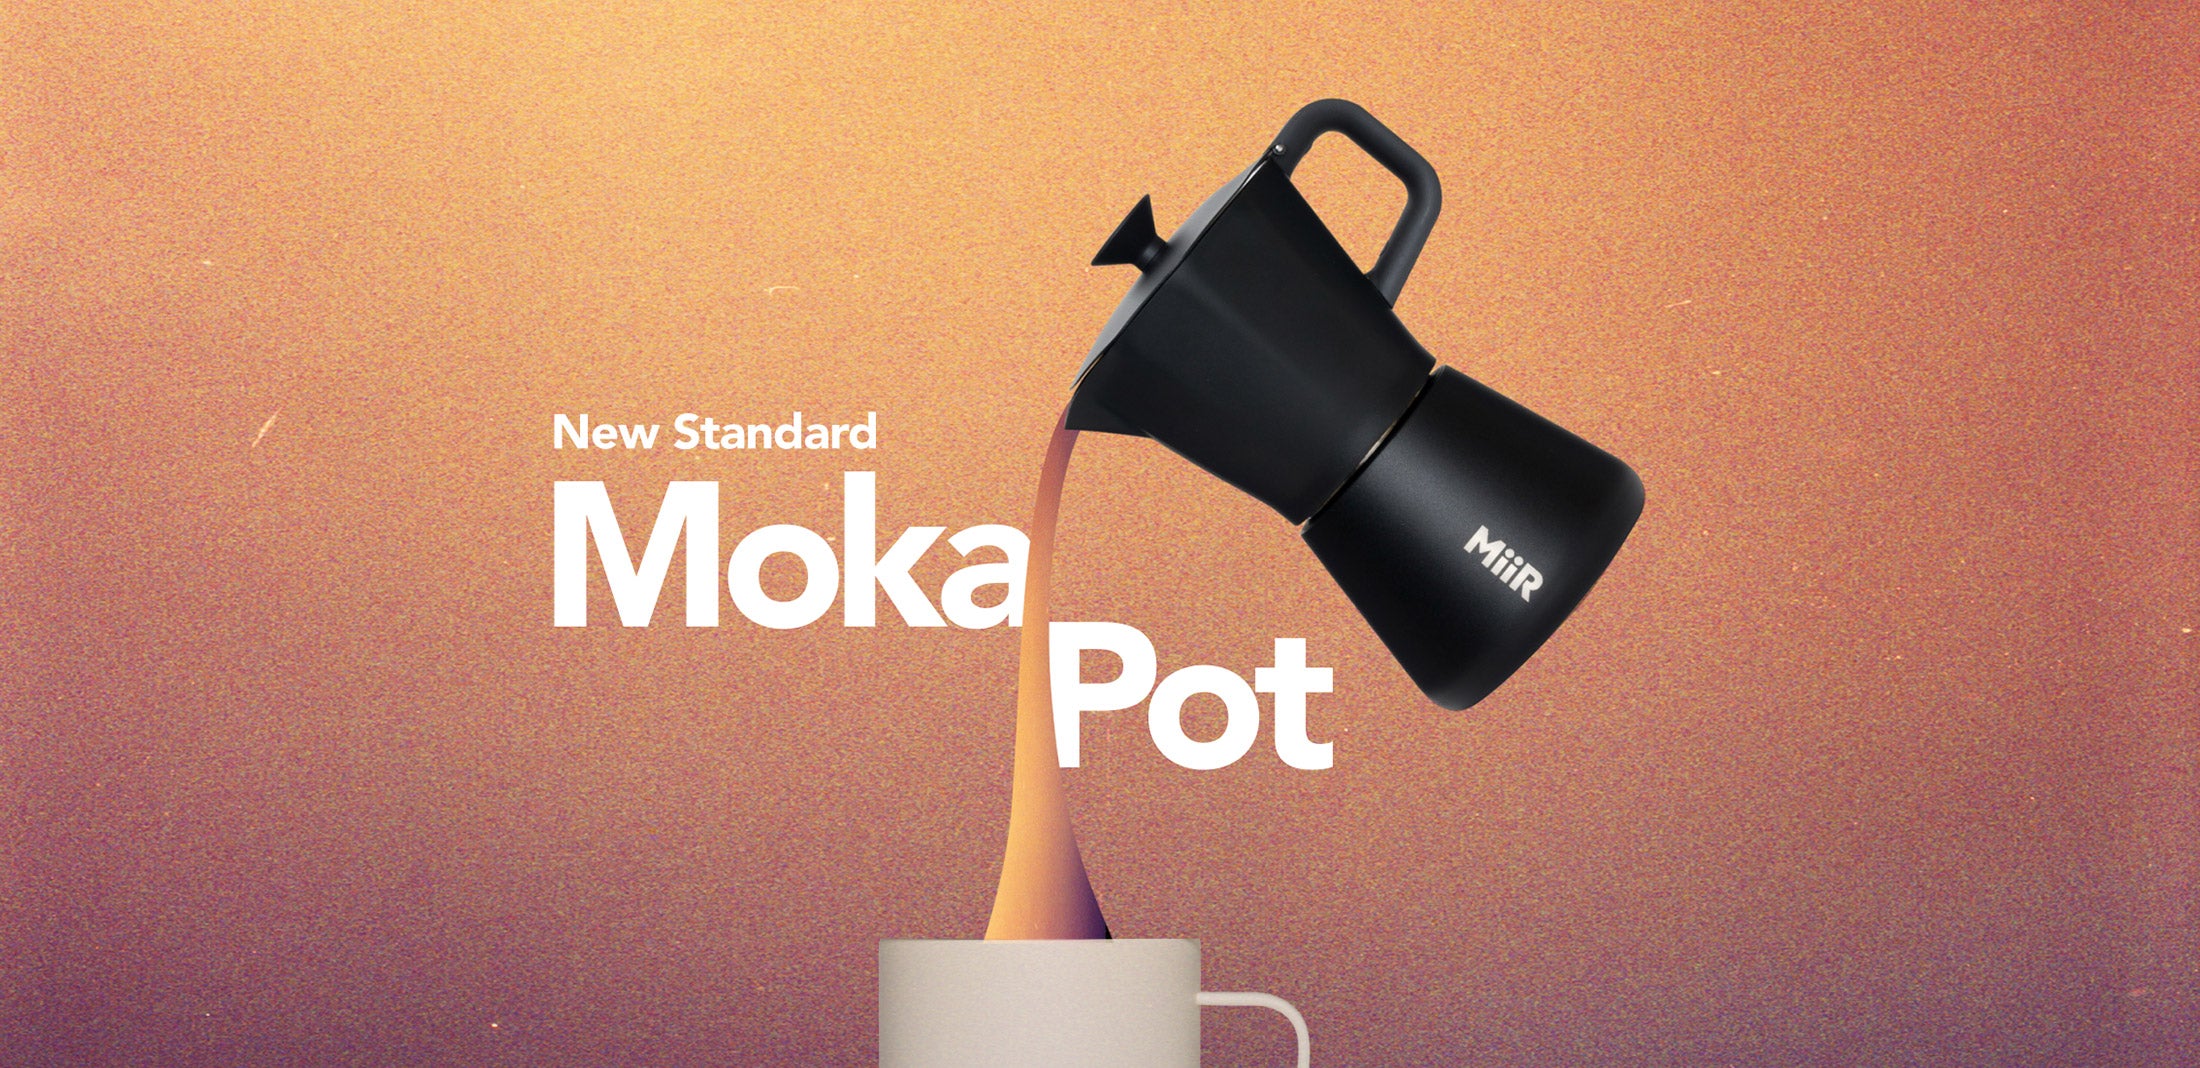 New Standard Moka Pot